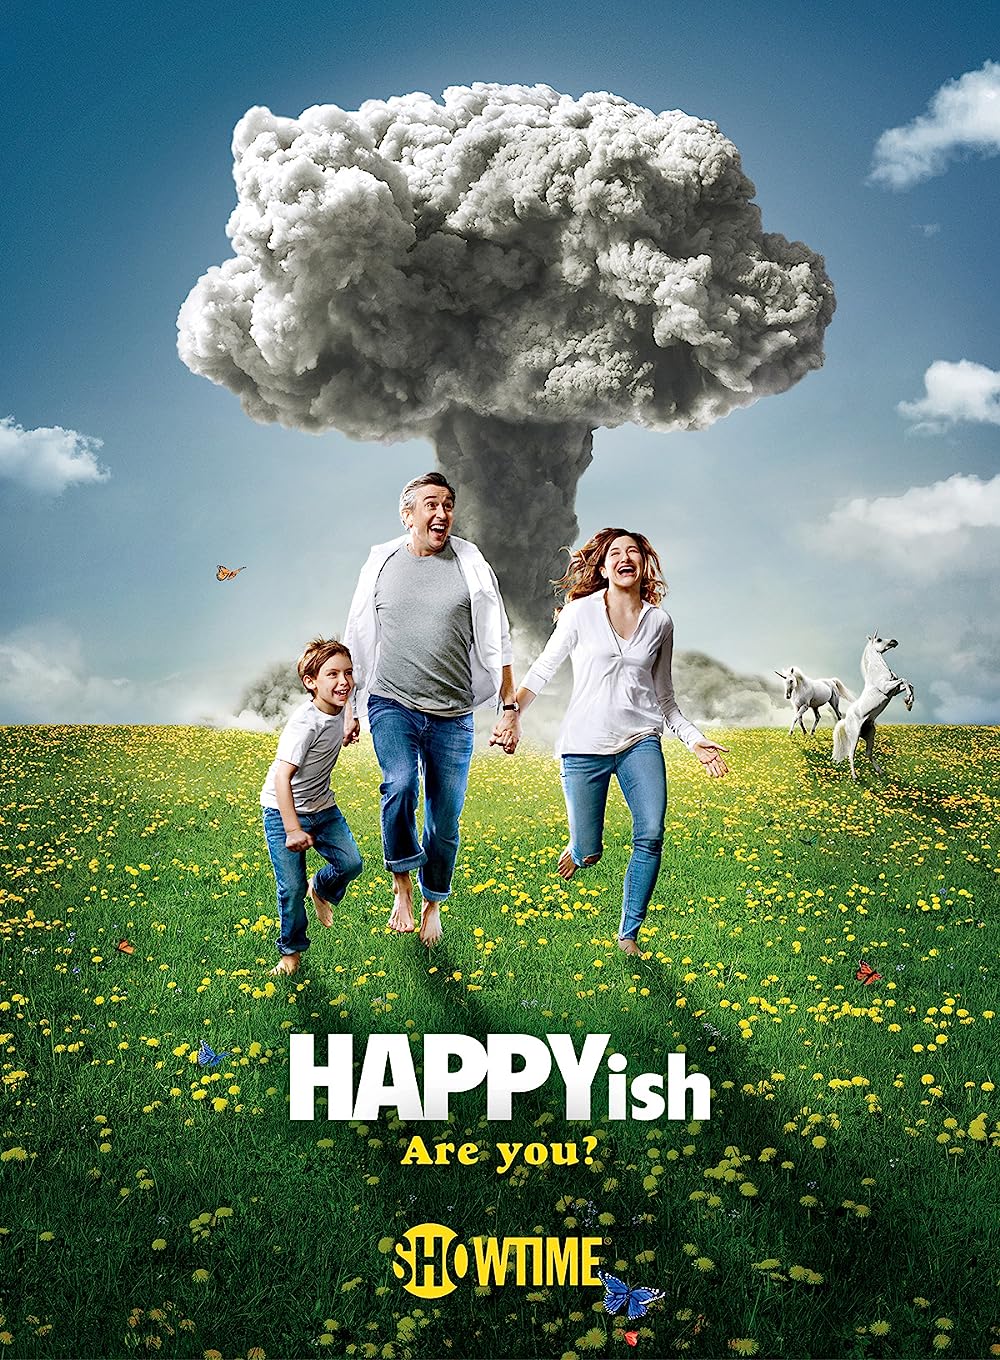 Happyish poster